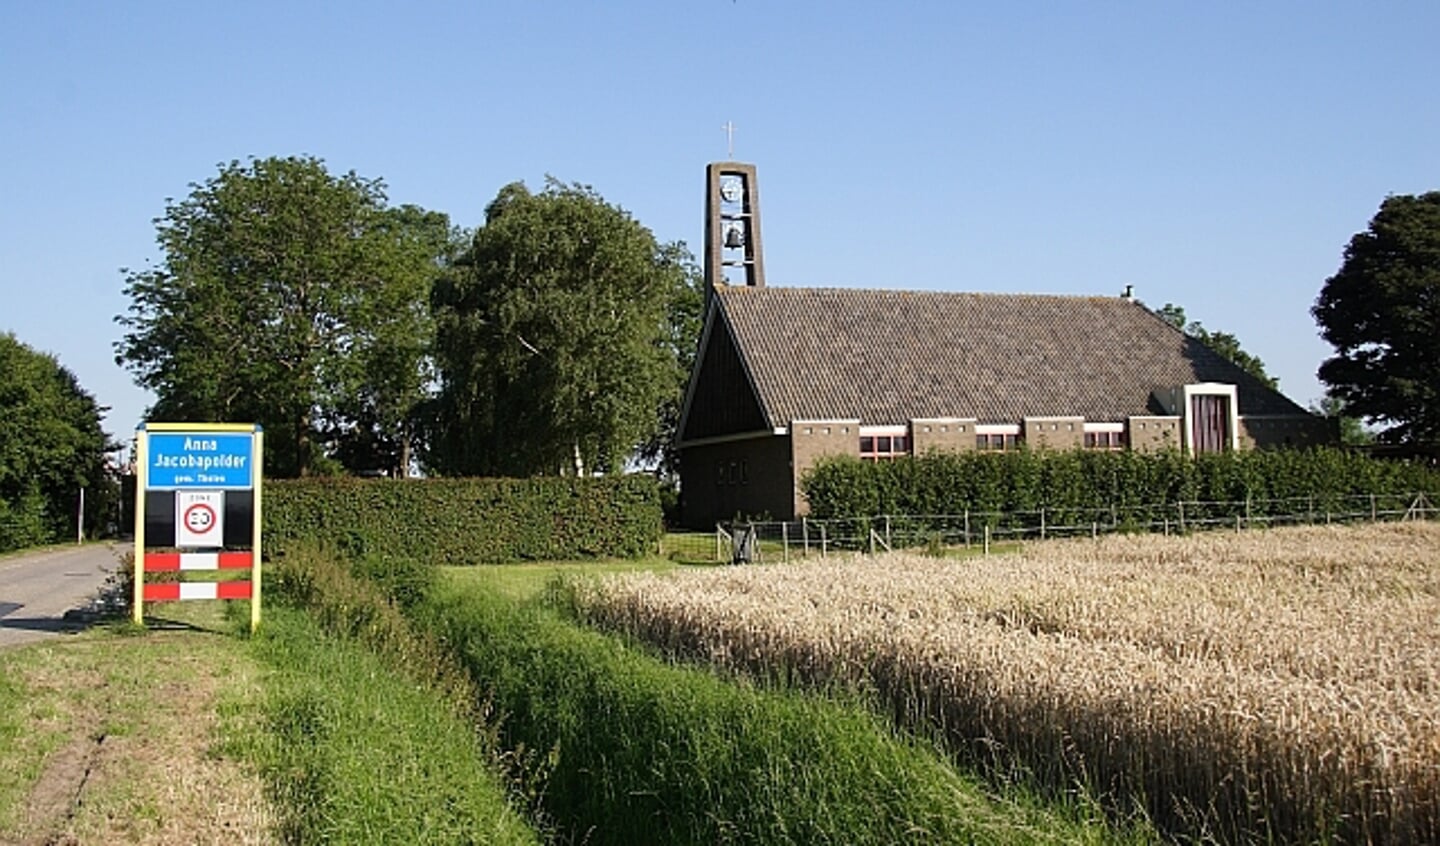 Ger. Kerk Anna-Jacobapolder.